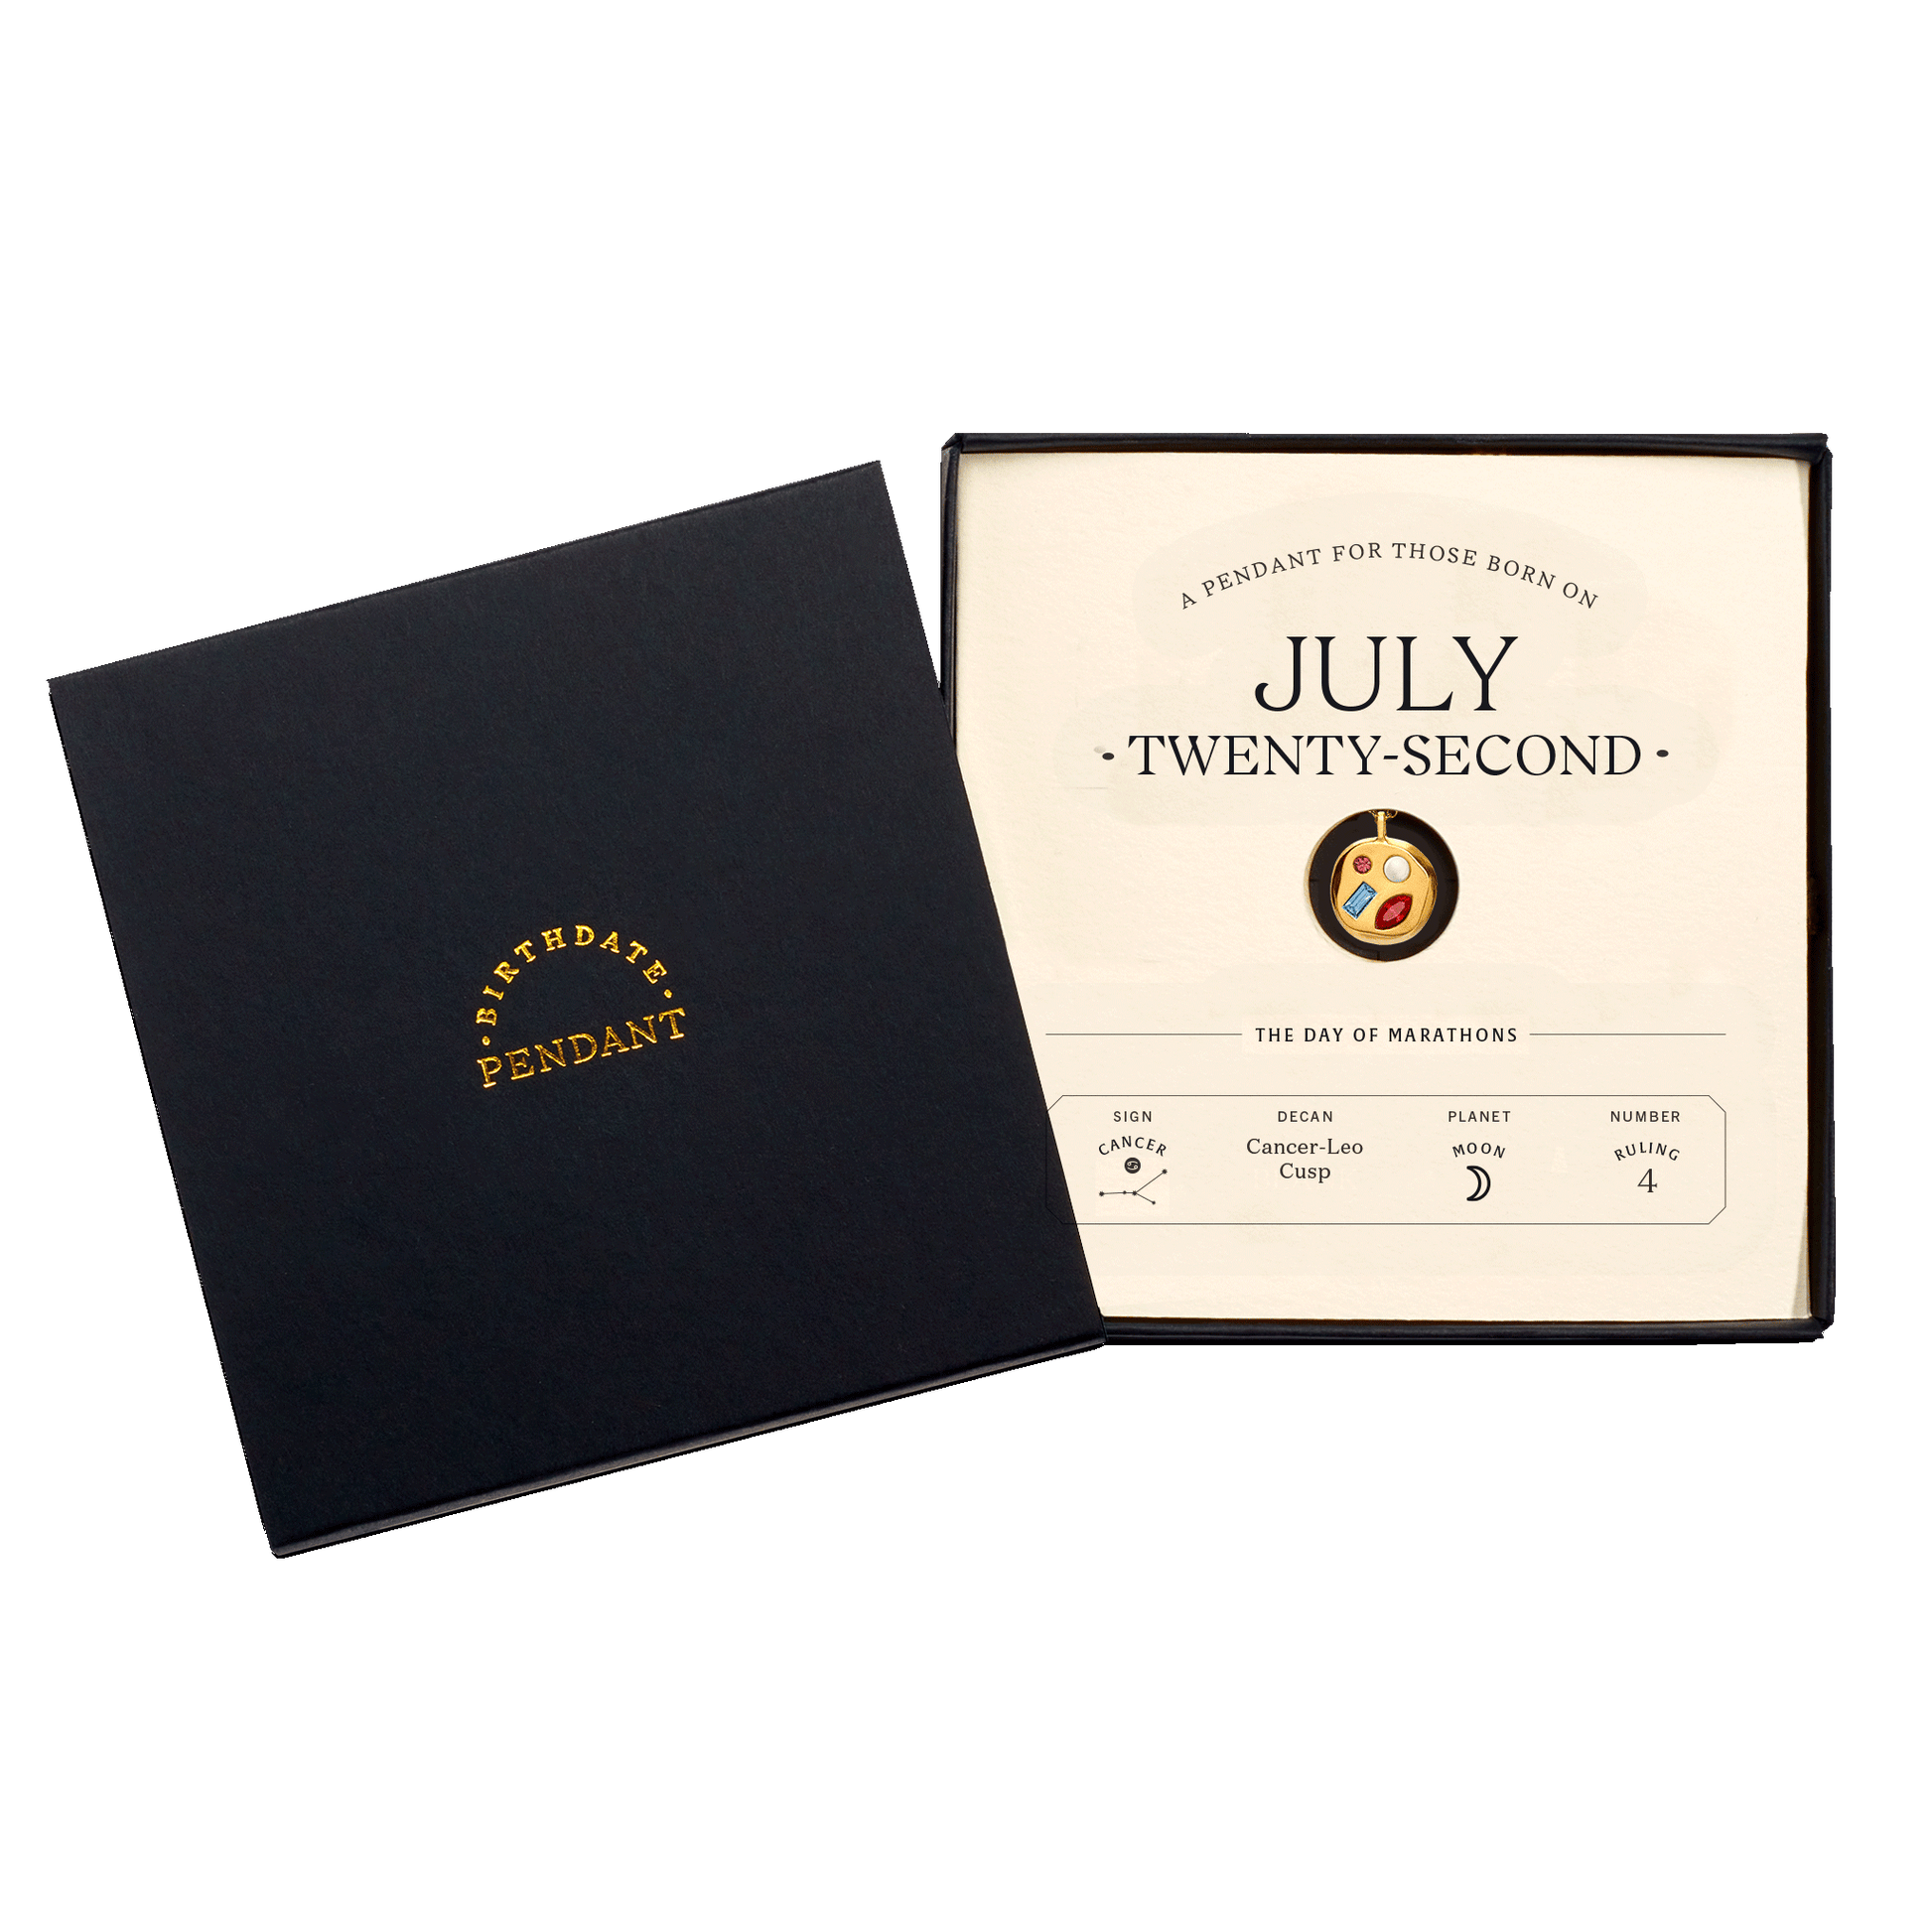 The July Twenty-Second Pendant inside its box